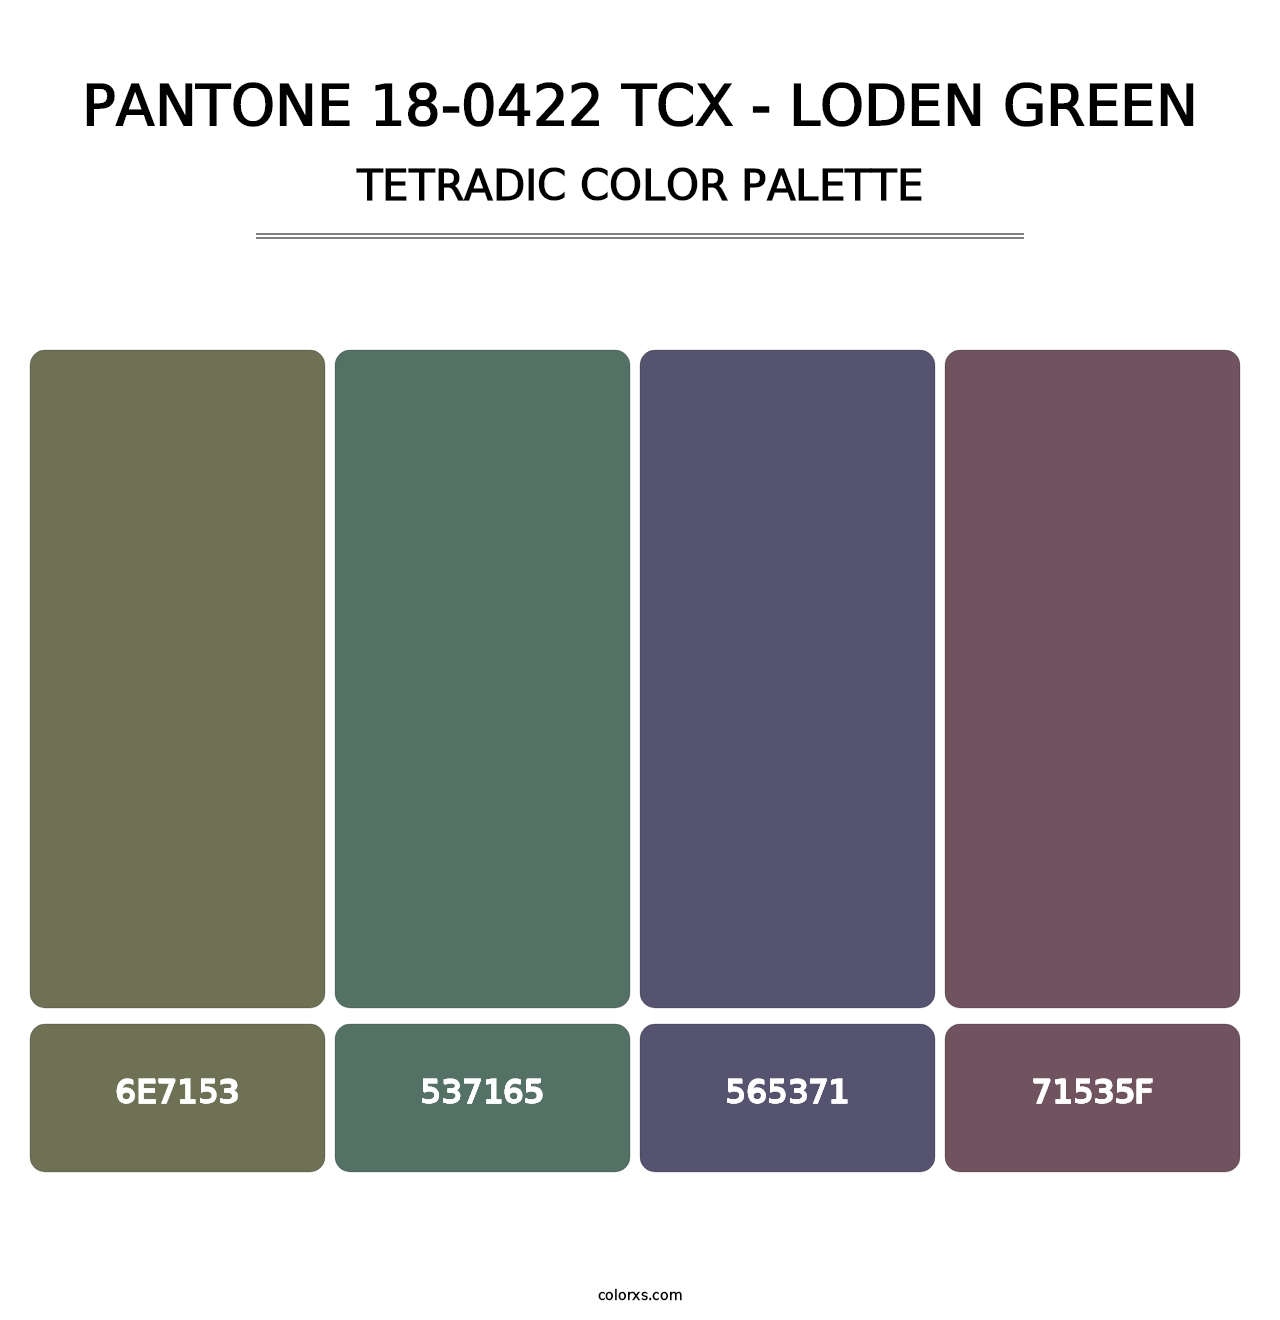 PANTONE 18-0422 TCX - Loden Green - Tetradic Color Palette